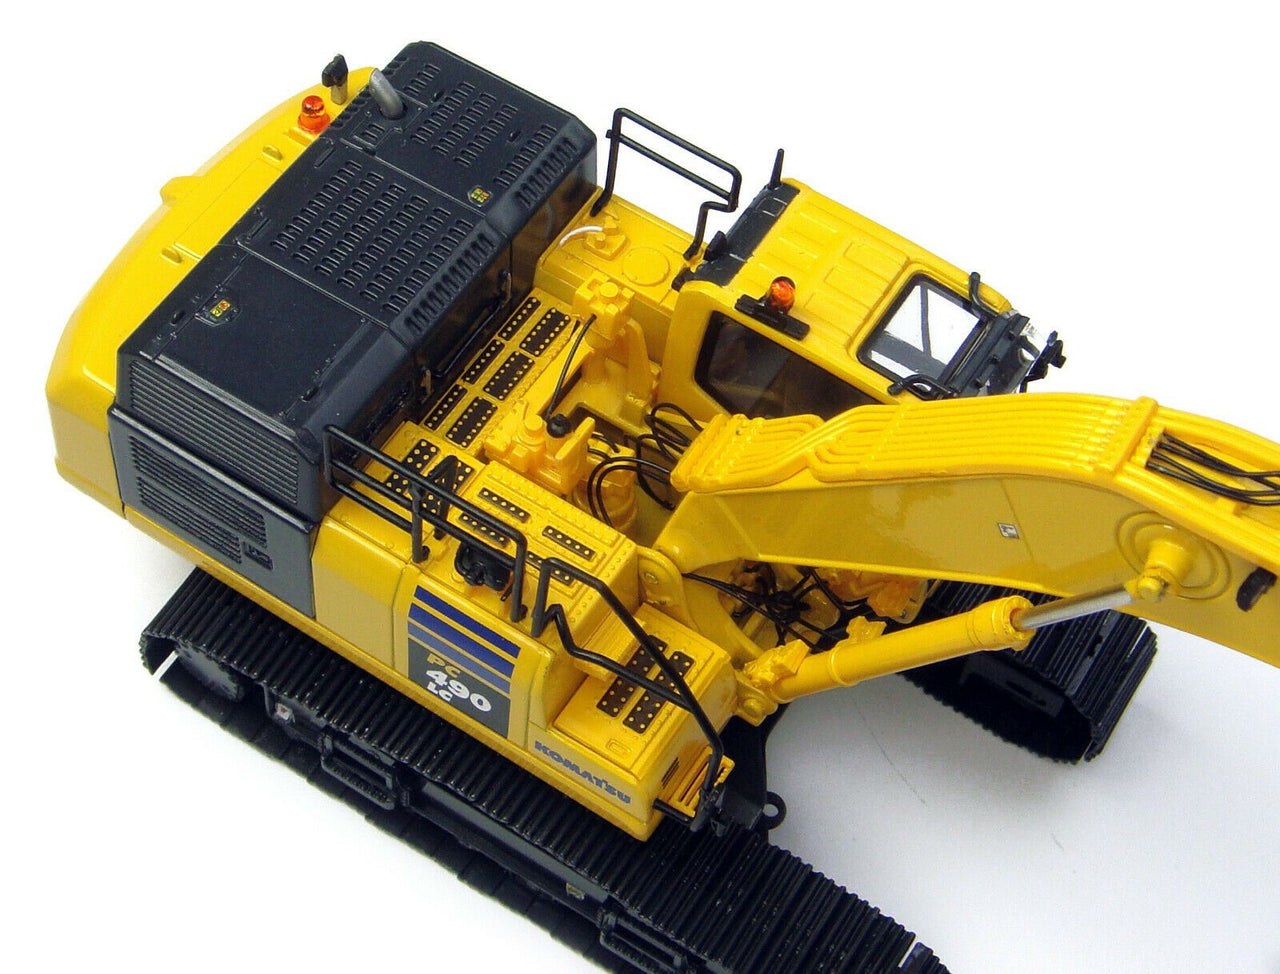 UH8090 Excavadora Komatsu PC490LC-10 Escala 1:50 (Modelo Descontinuado) - CAT SERVICE PERU S.A.C.